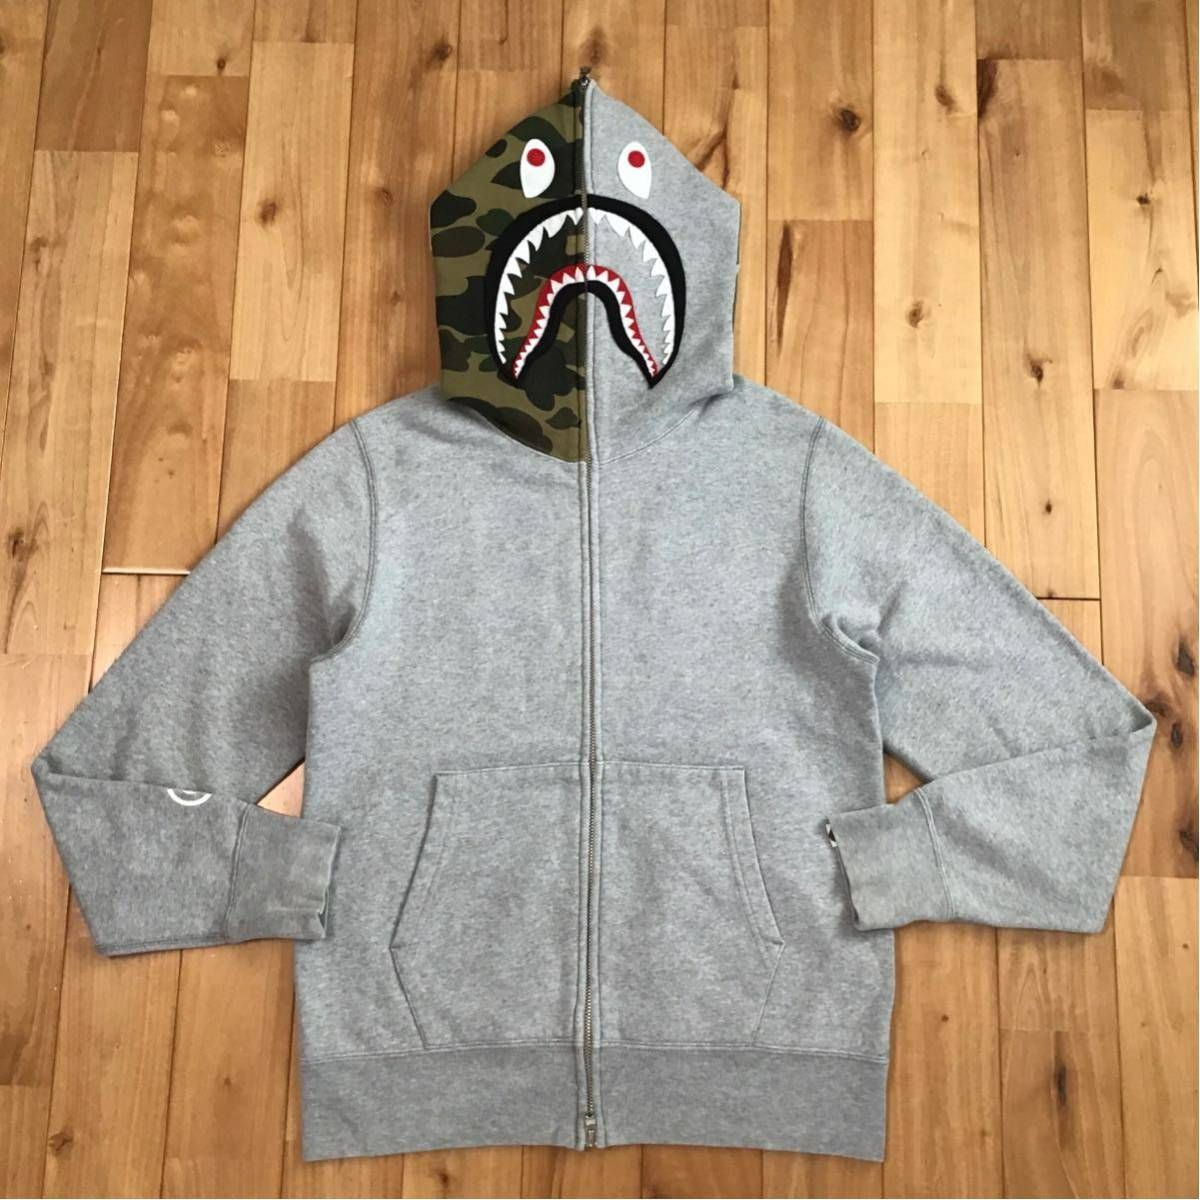 シャーク パーカー 1st camo green グレー Sサイズ shark full zip hoodie a bathing ape BAPE  エイプ ベイプ アベイシングエイプ